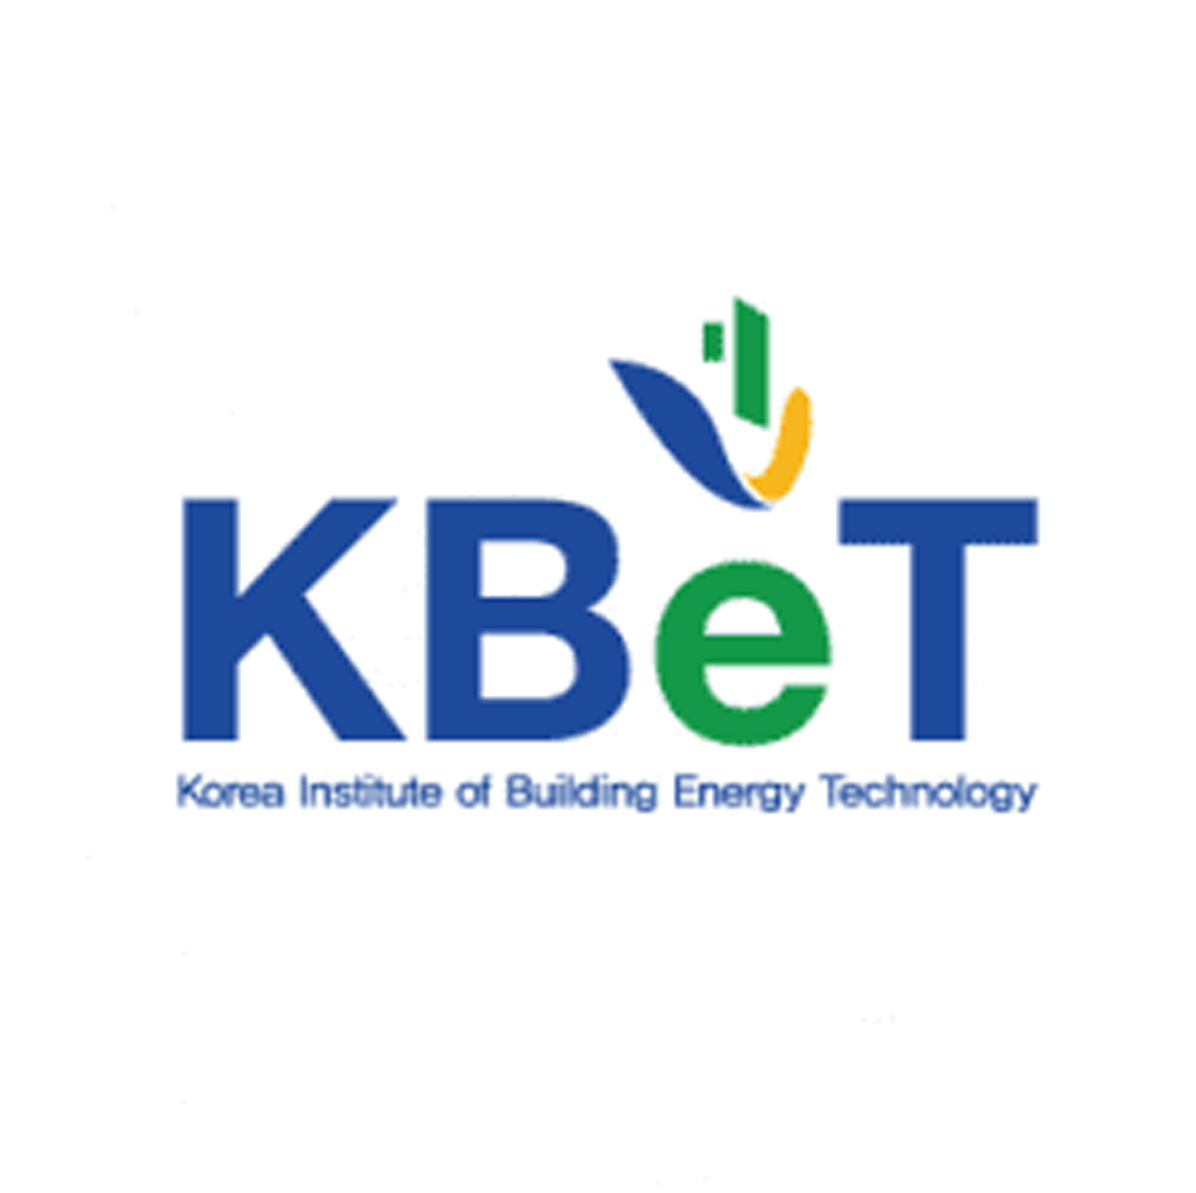 Korea Institute of Building Energy Technology